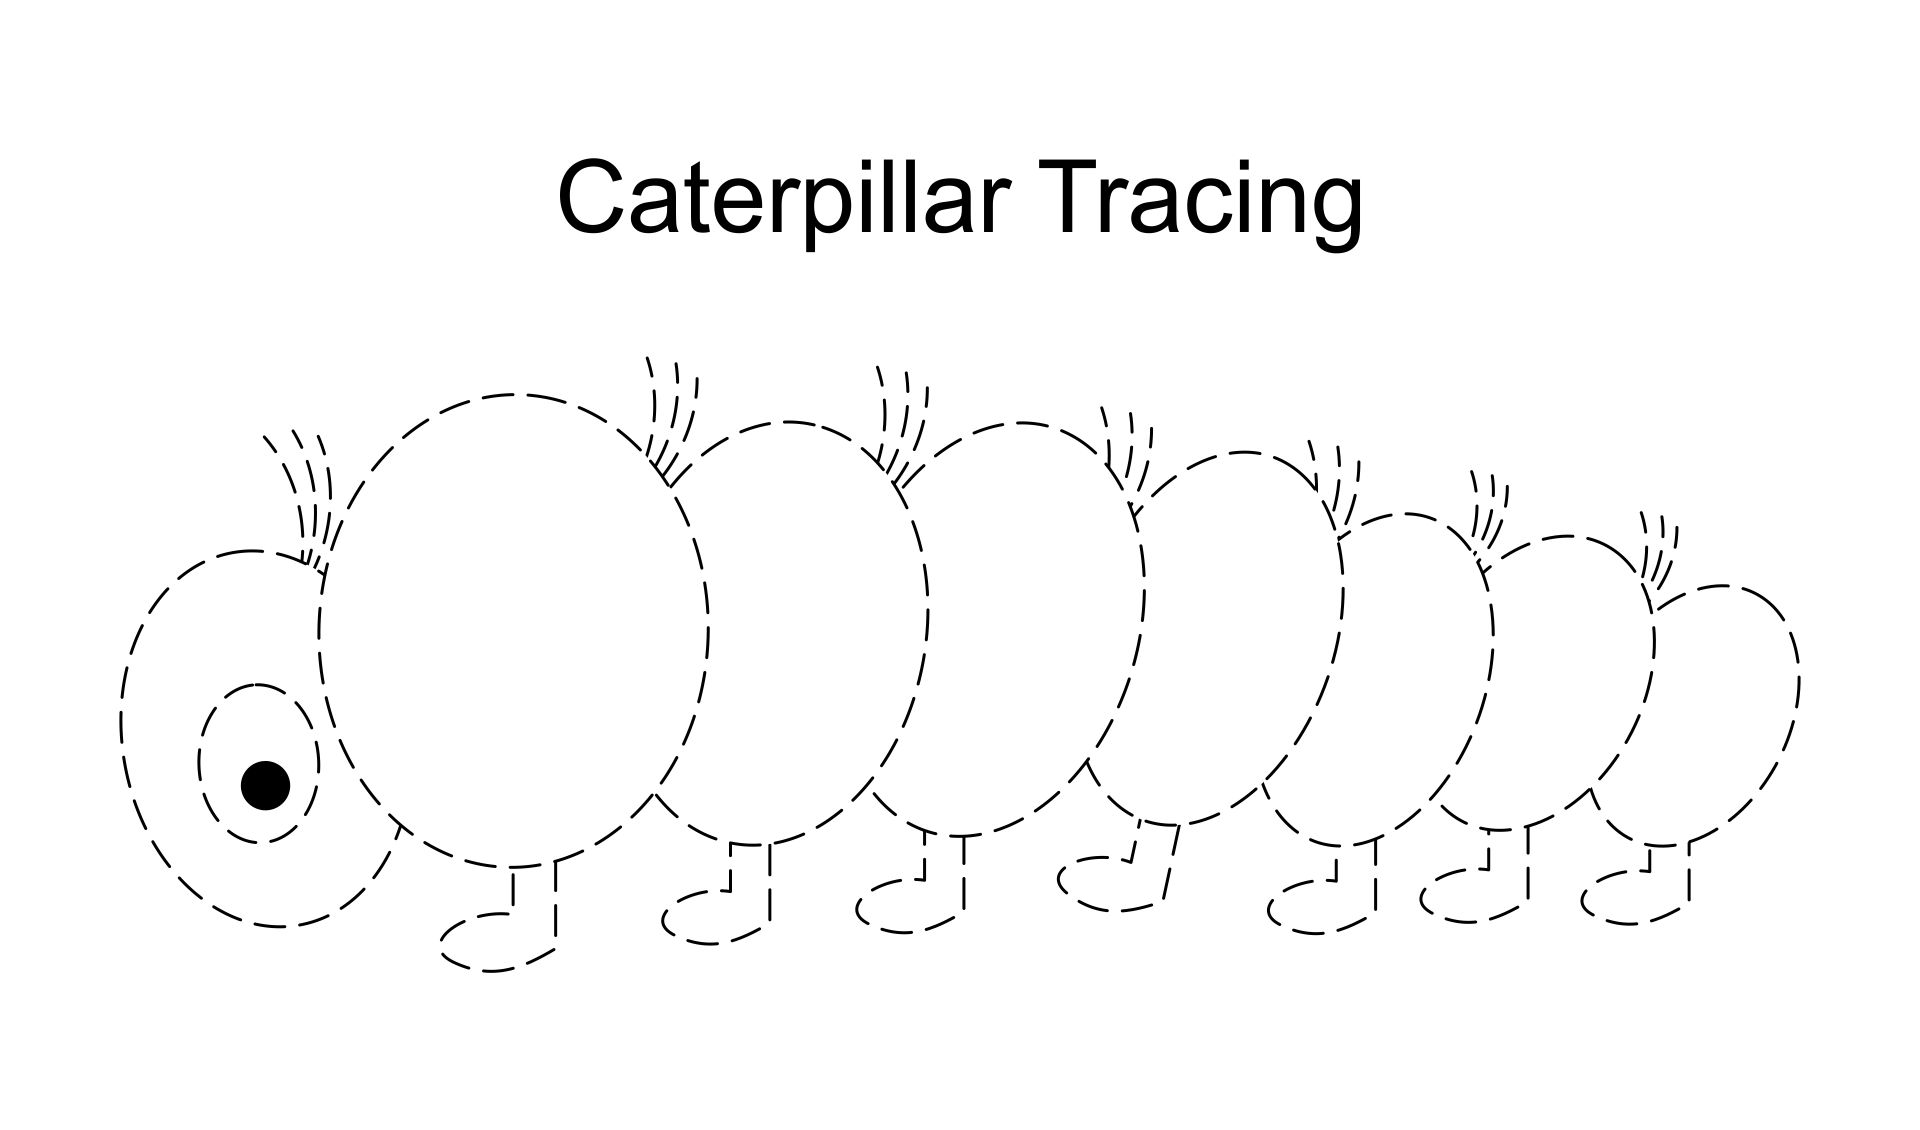 Caterpillar Tracing Worksheet